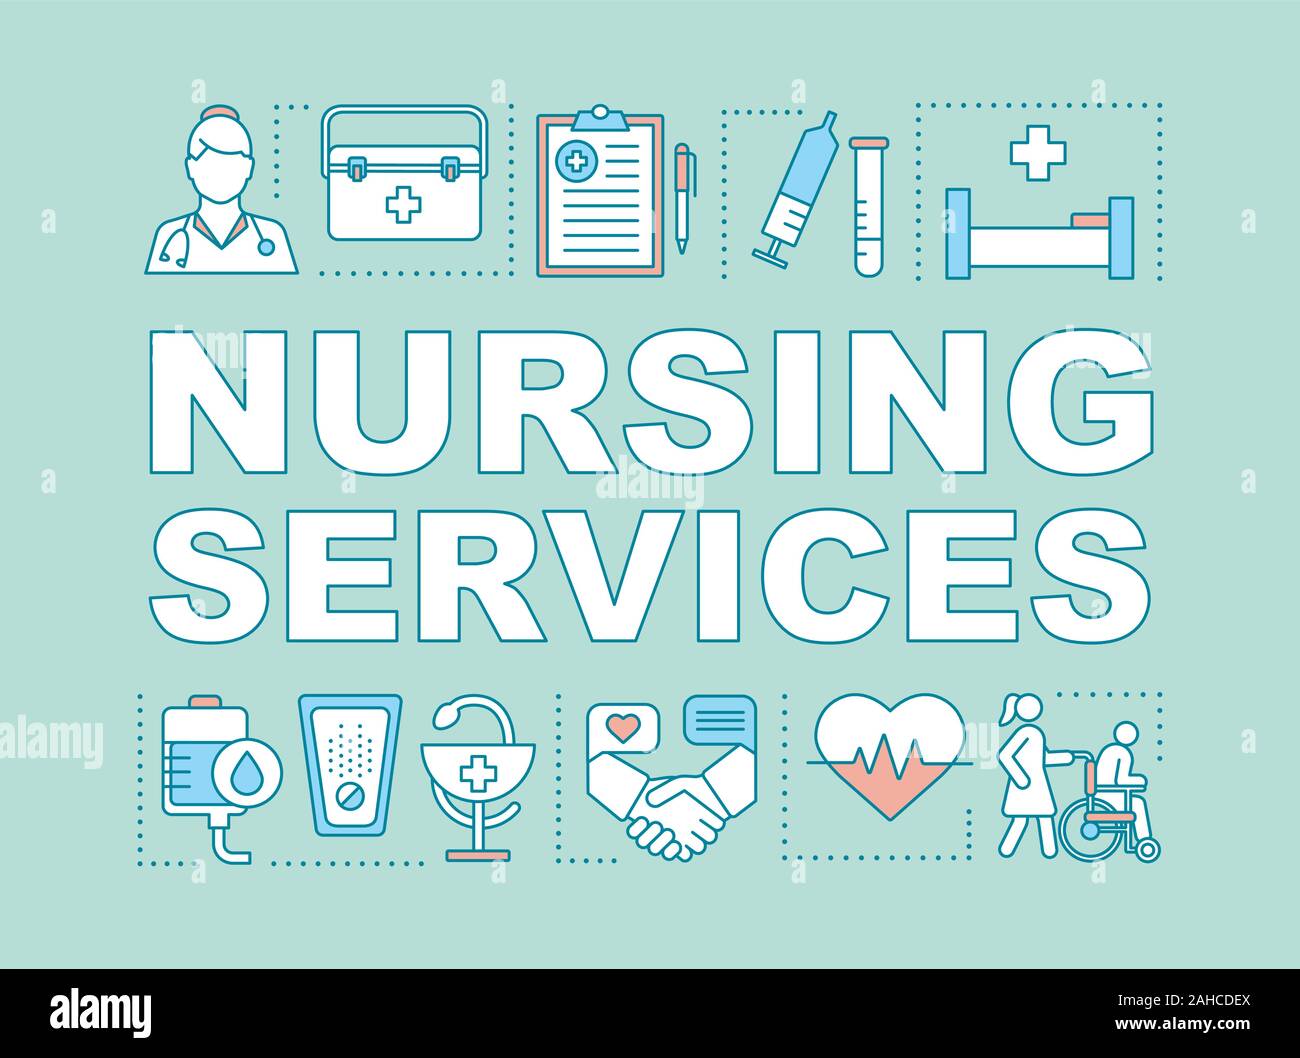 Nursing service word concepts banner. Medicine and healthcare. Home care. Living assistance. Caregiver, carer. Presentation, website. Isolated letteri Stock Vector